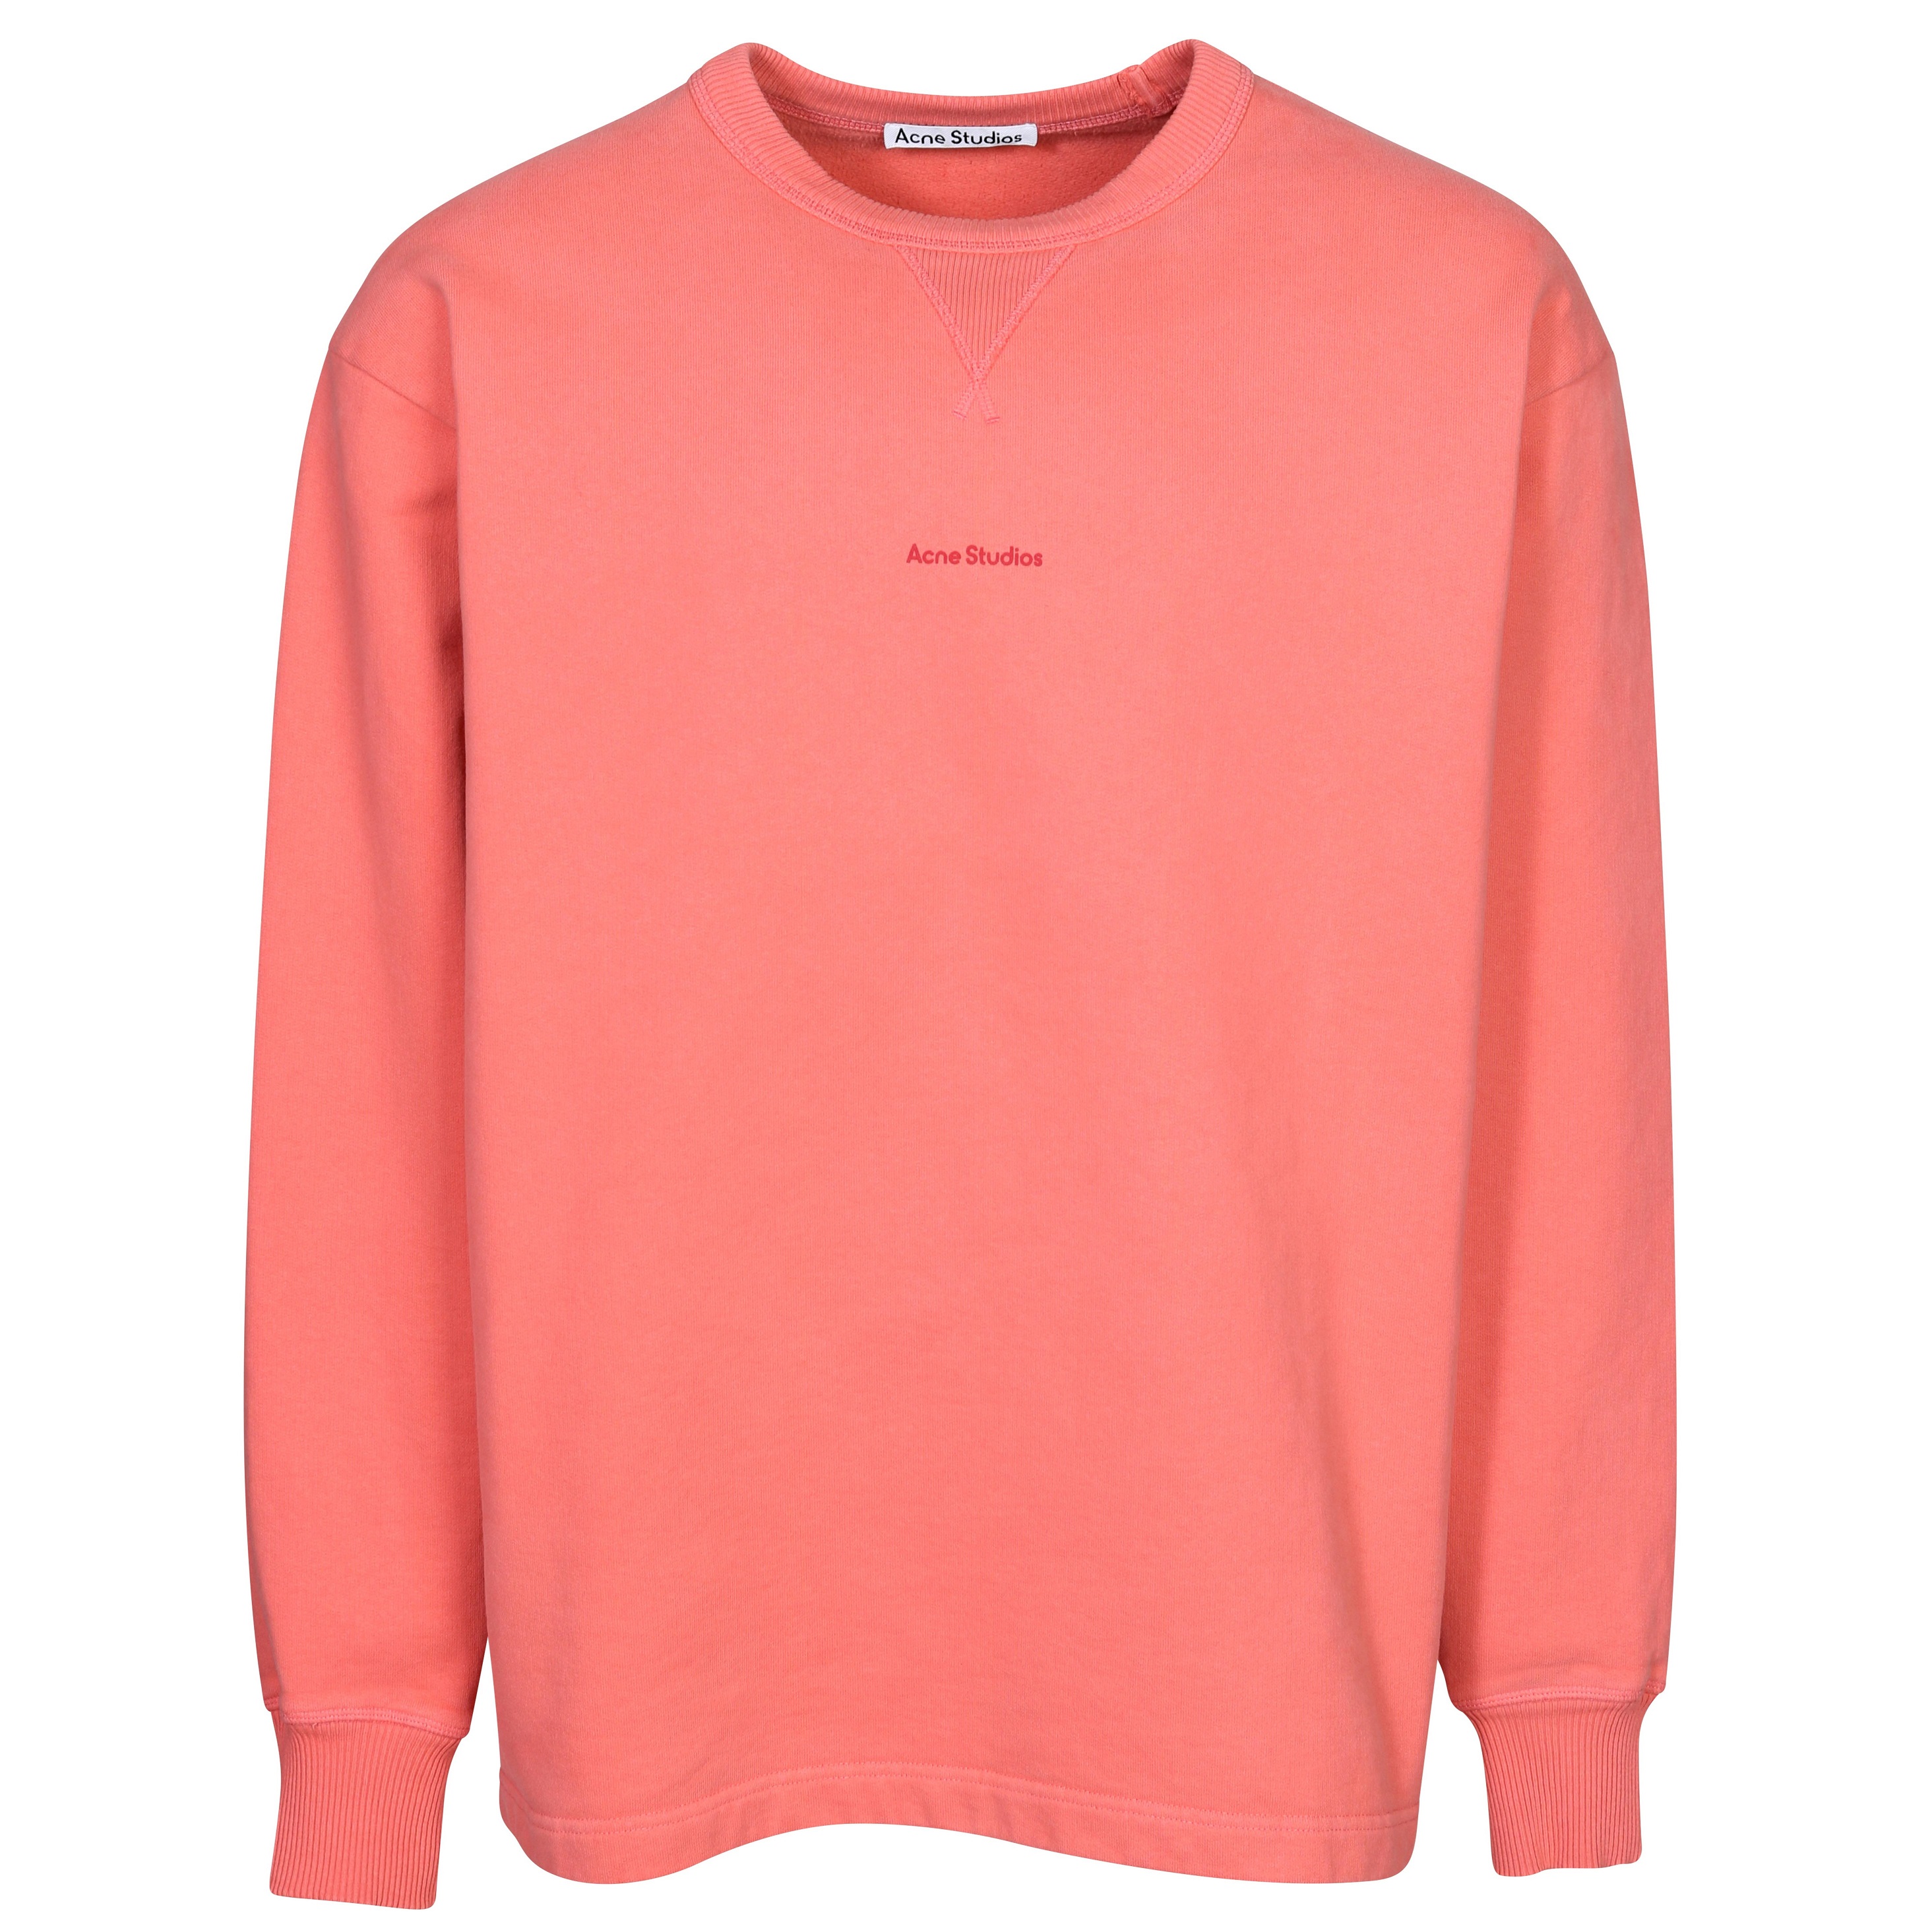 Acne Studios Stamp Sweatshirt in Salmon Pink